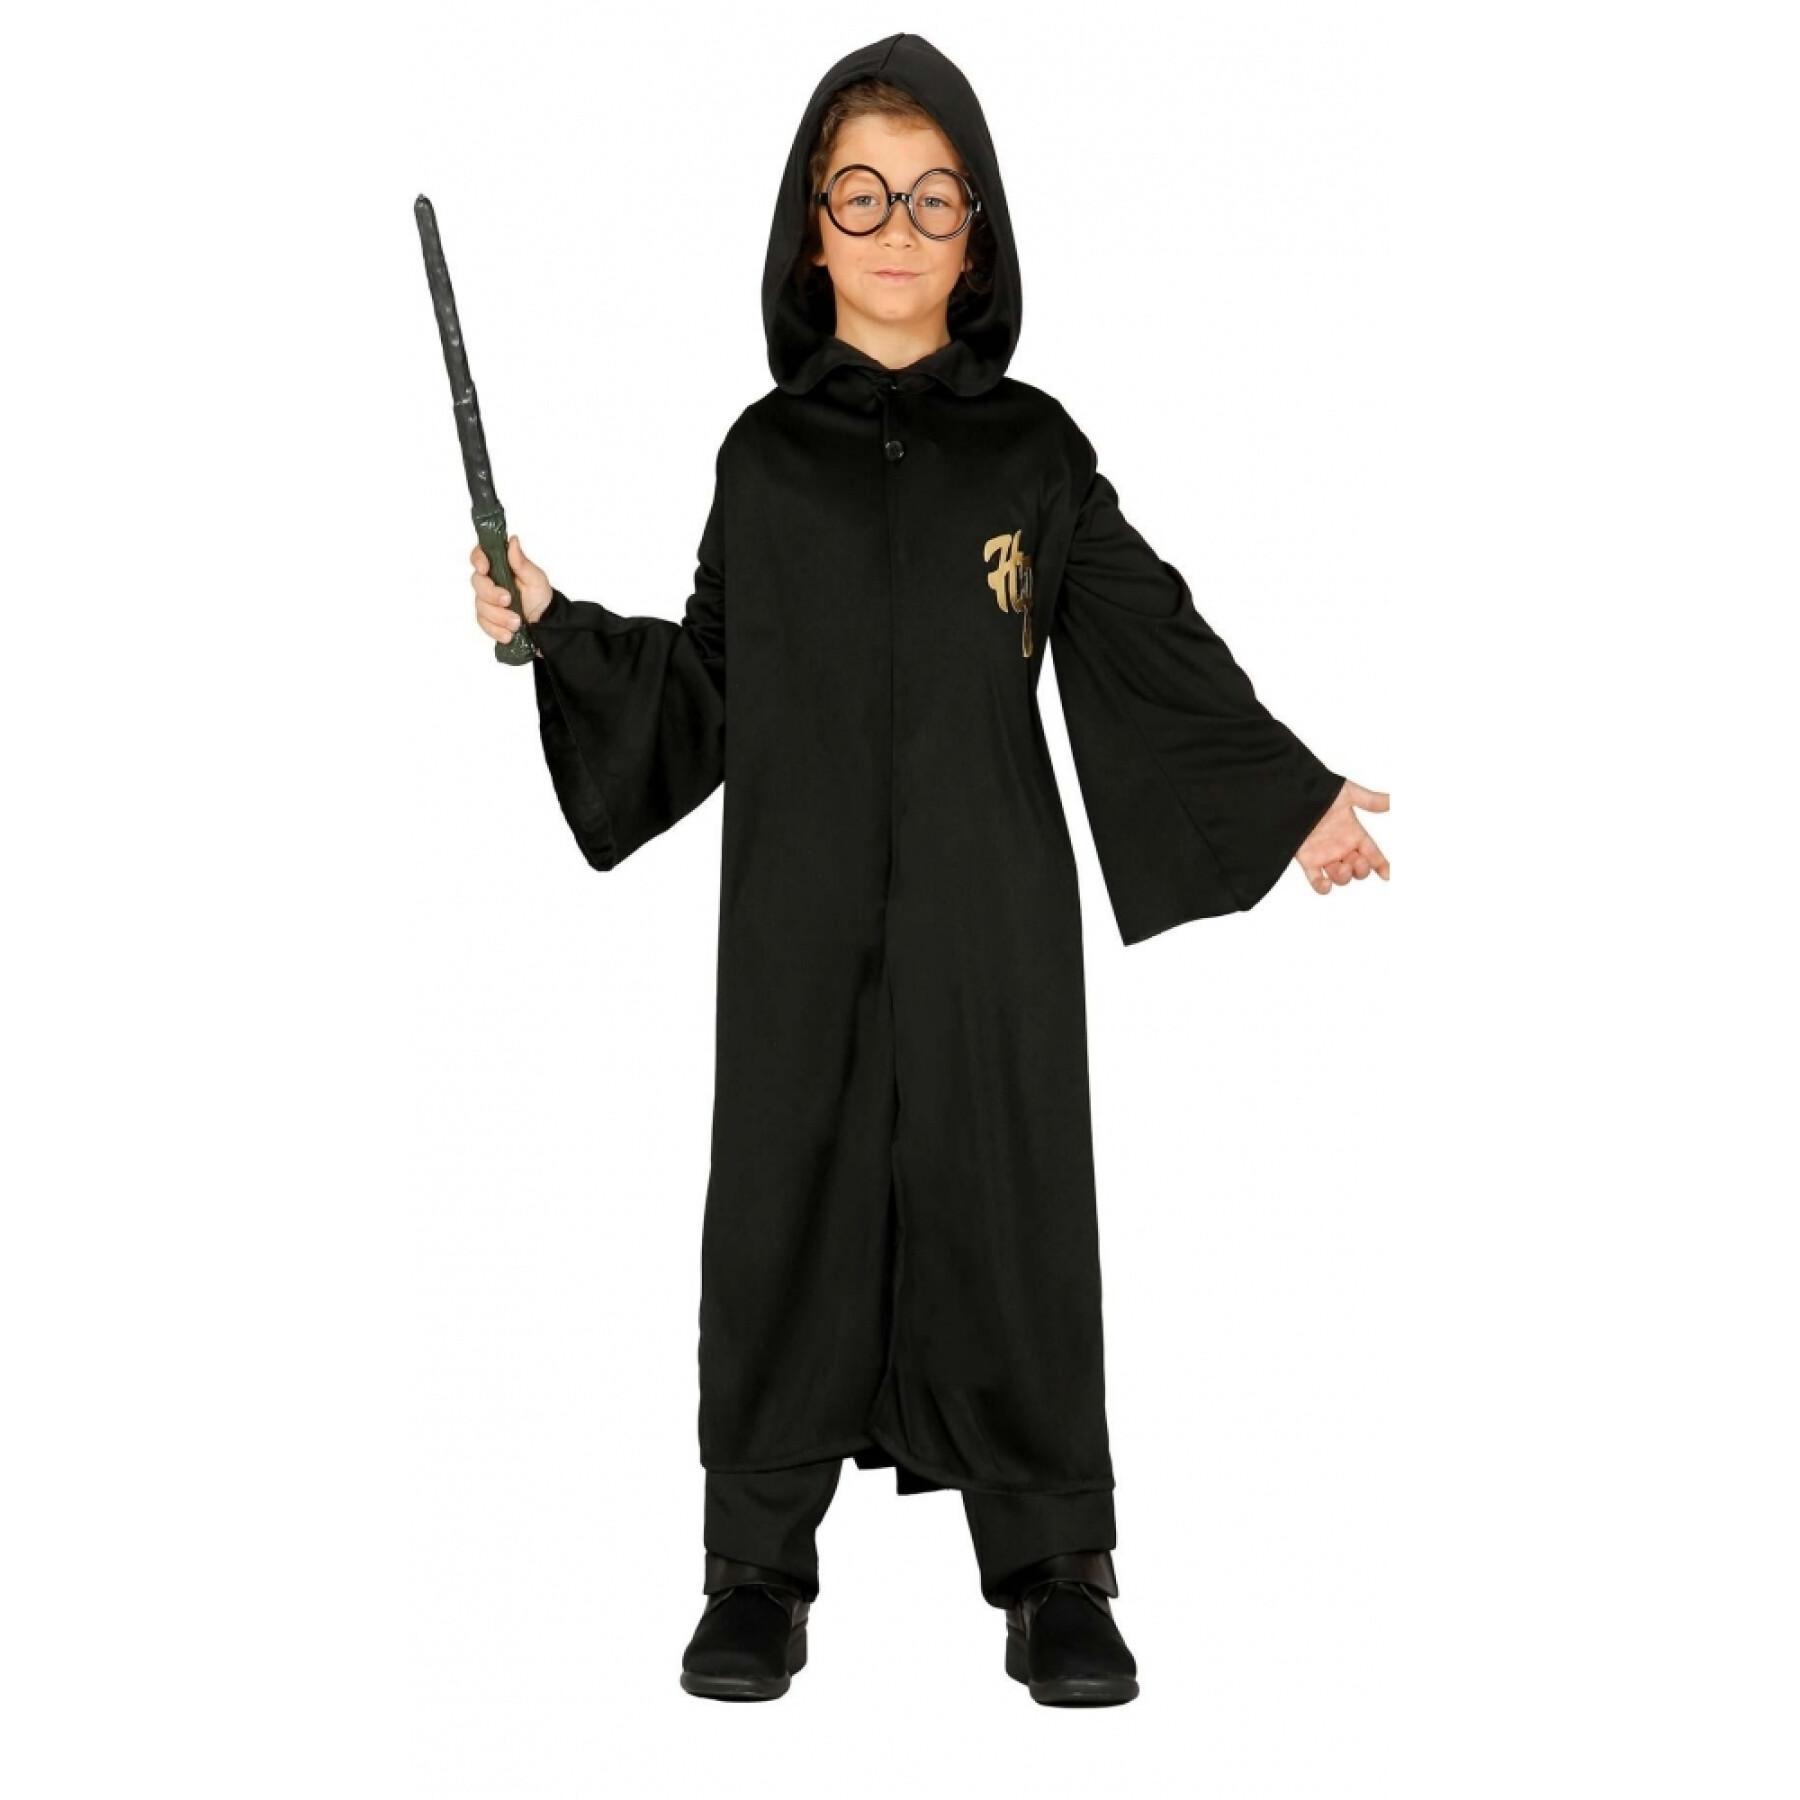 Disguise apprentice magician Harry Potter